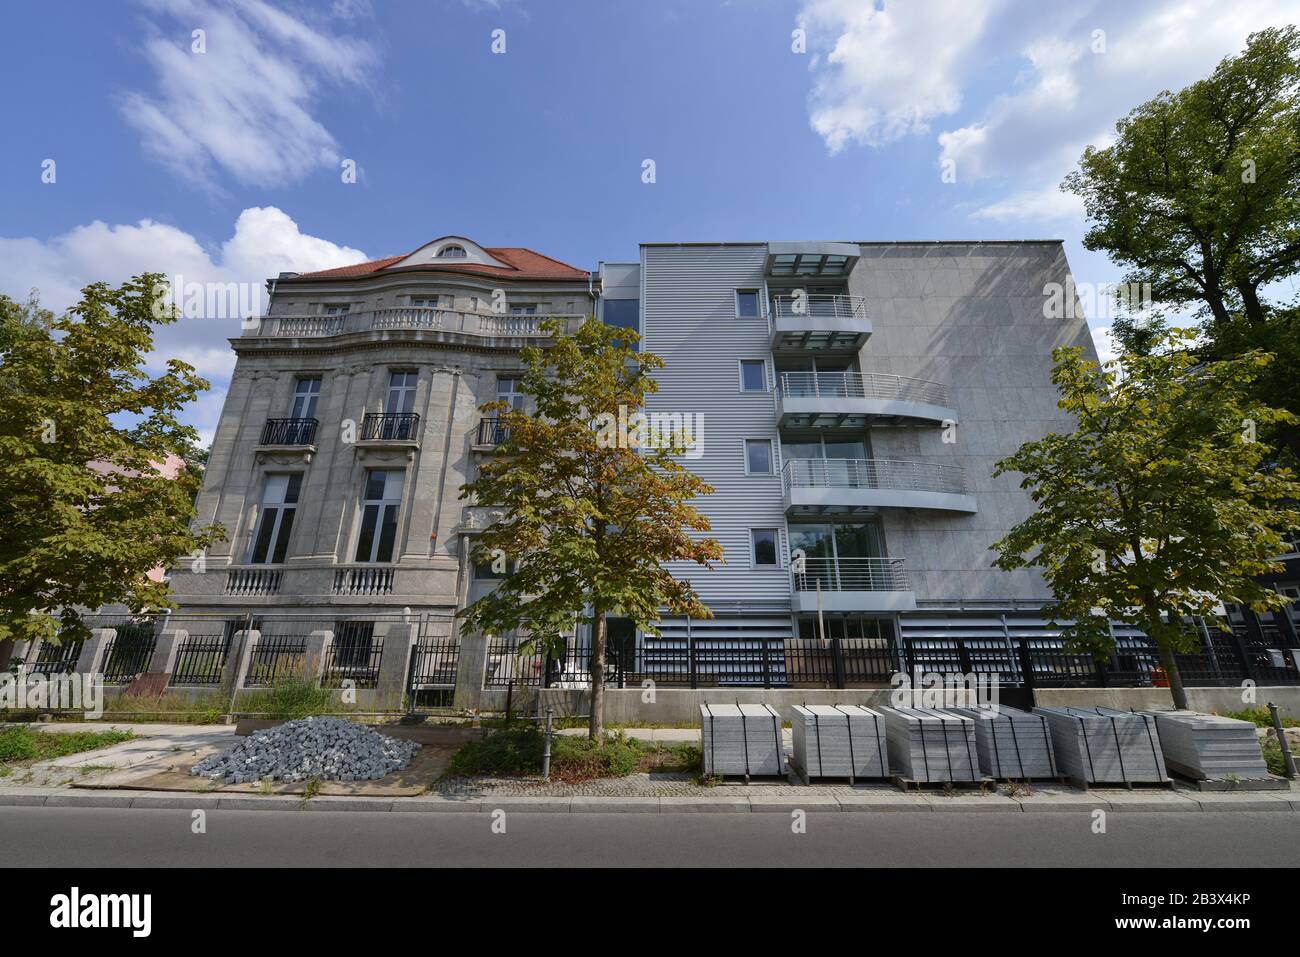 Botschaft Griechenland, Hiroshimastrasse, Tiergarten, Berlin, Deutschland Stock Photo